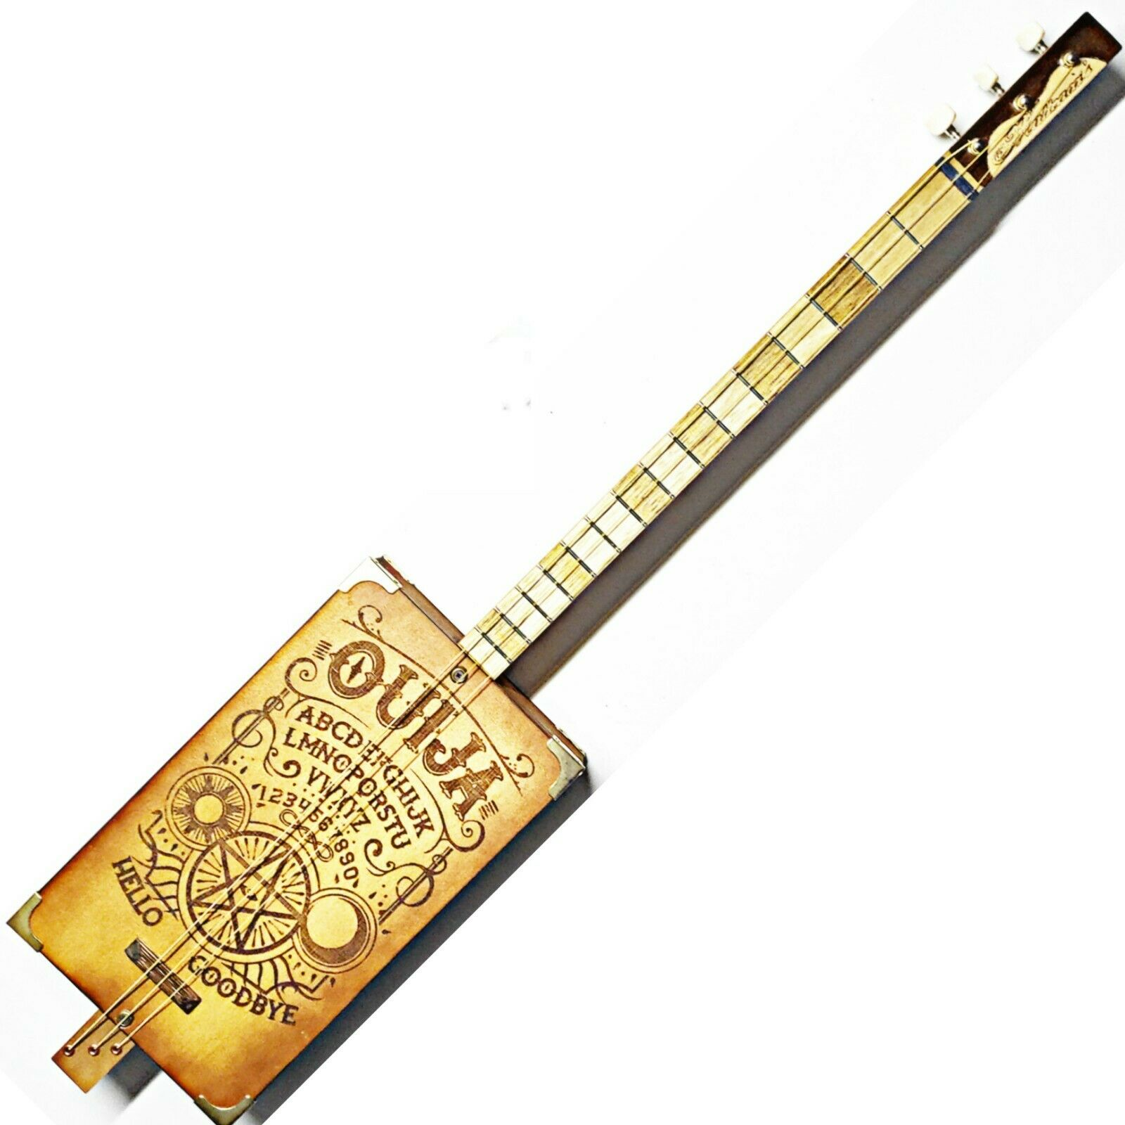 Ouija 4 tpv cigar box guitar Matteacci's Made in Italy